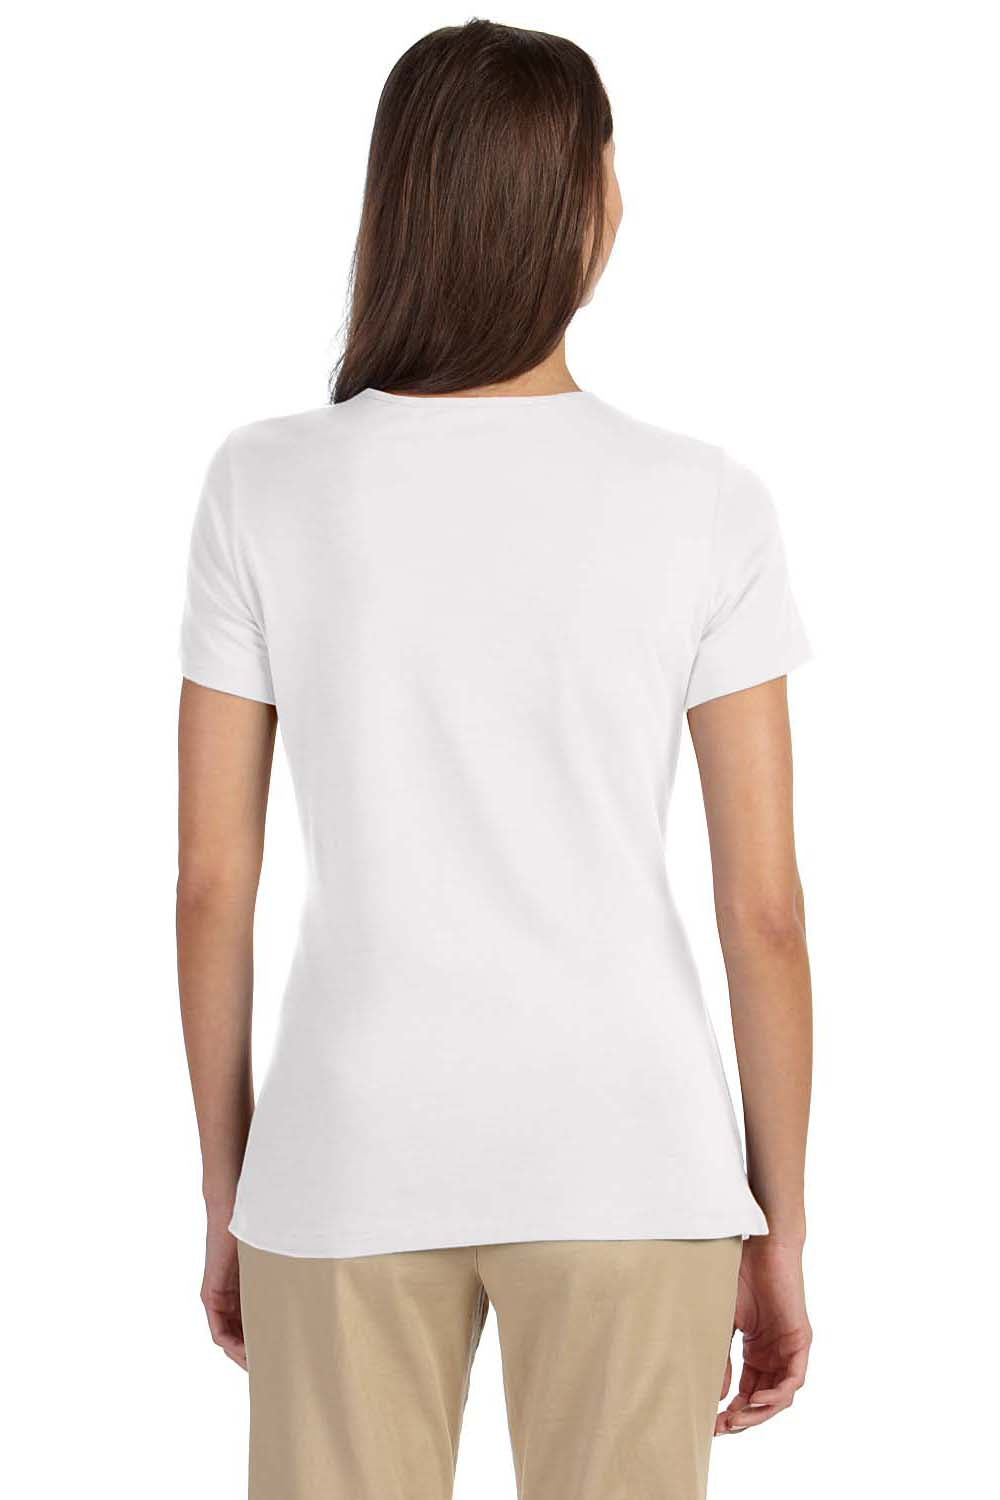 Devon & Jones DP182W Womens Perfect Fit Short Sleeve Crewneck T-Shirt White Back